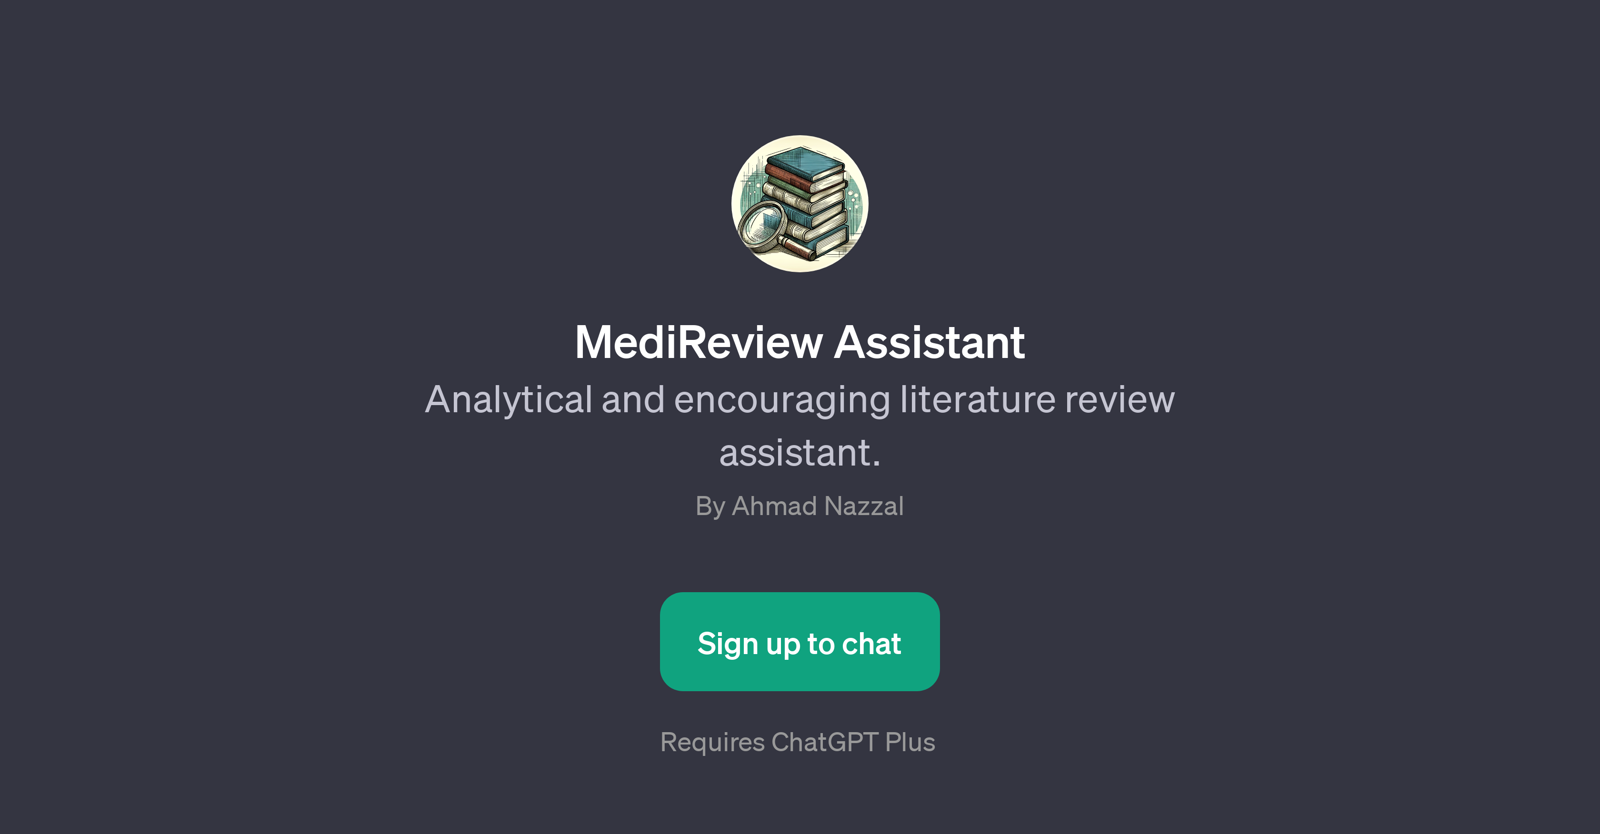 MediReview Assistant website